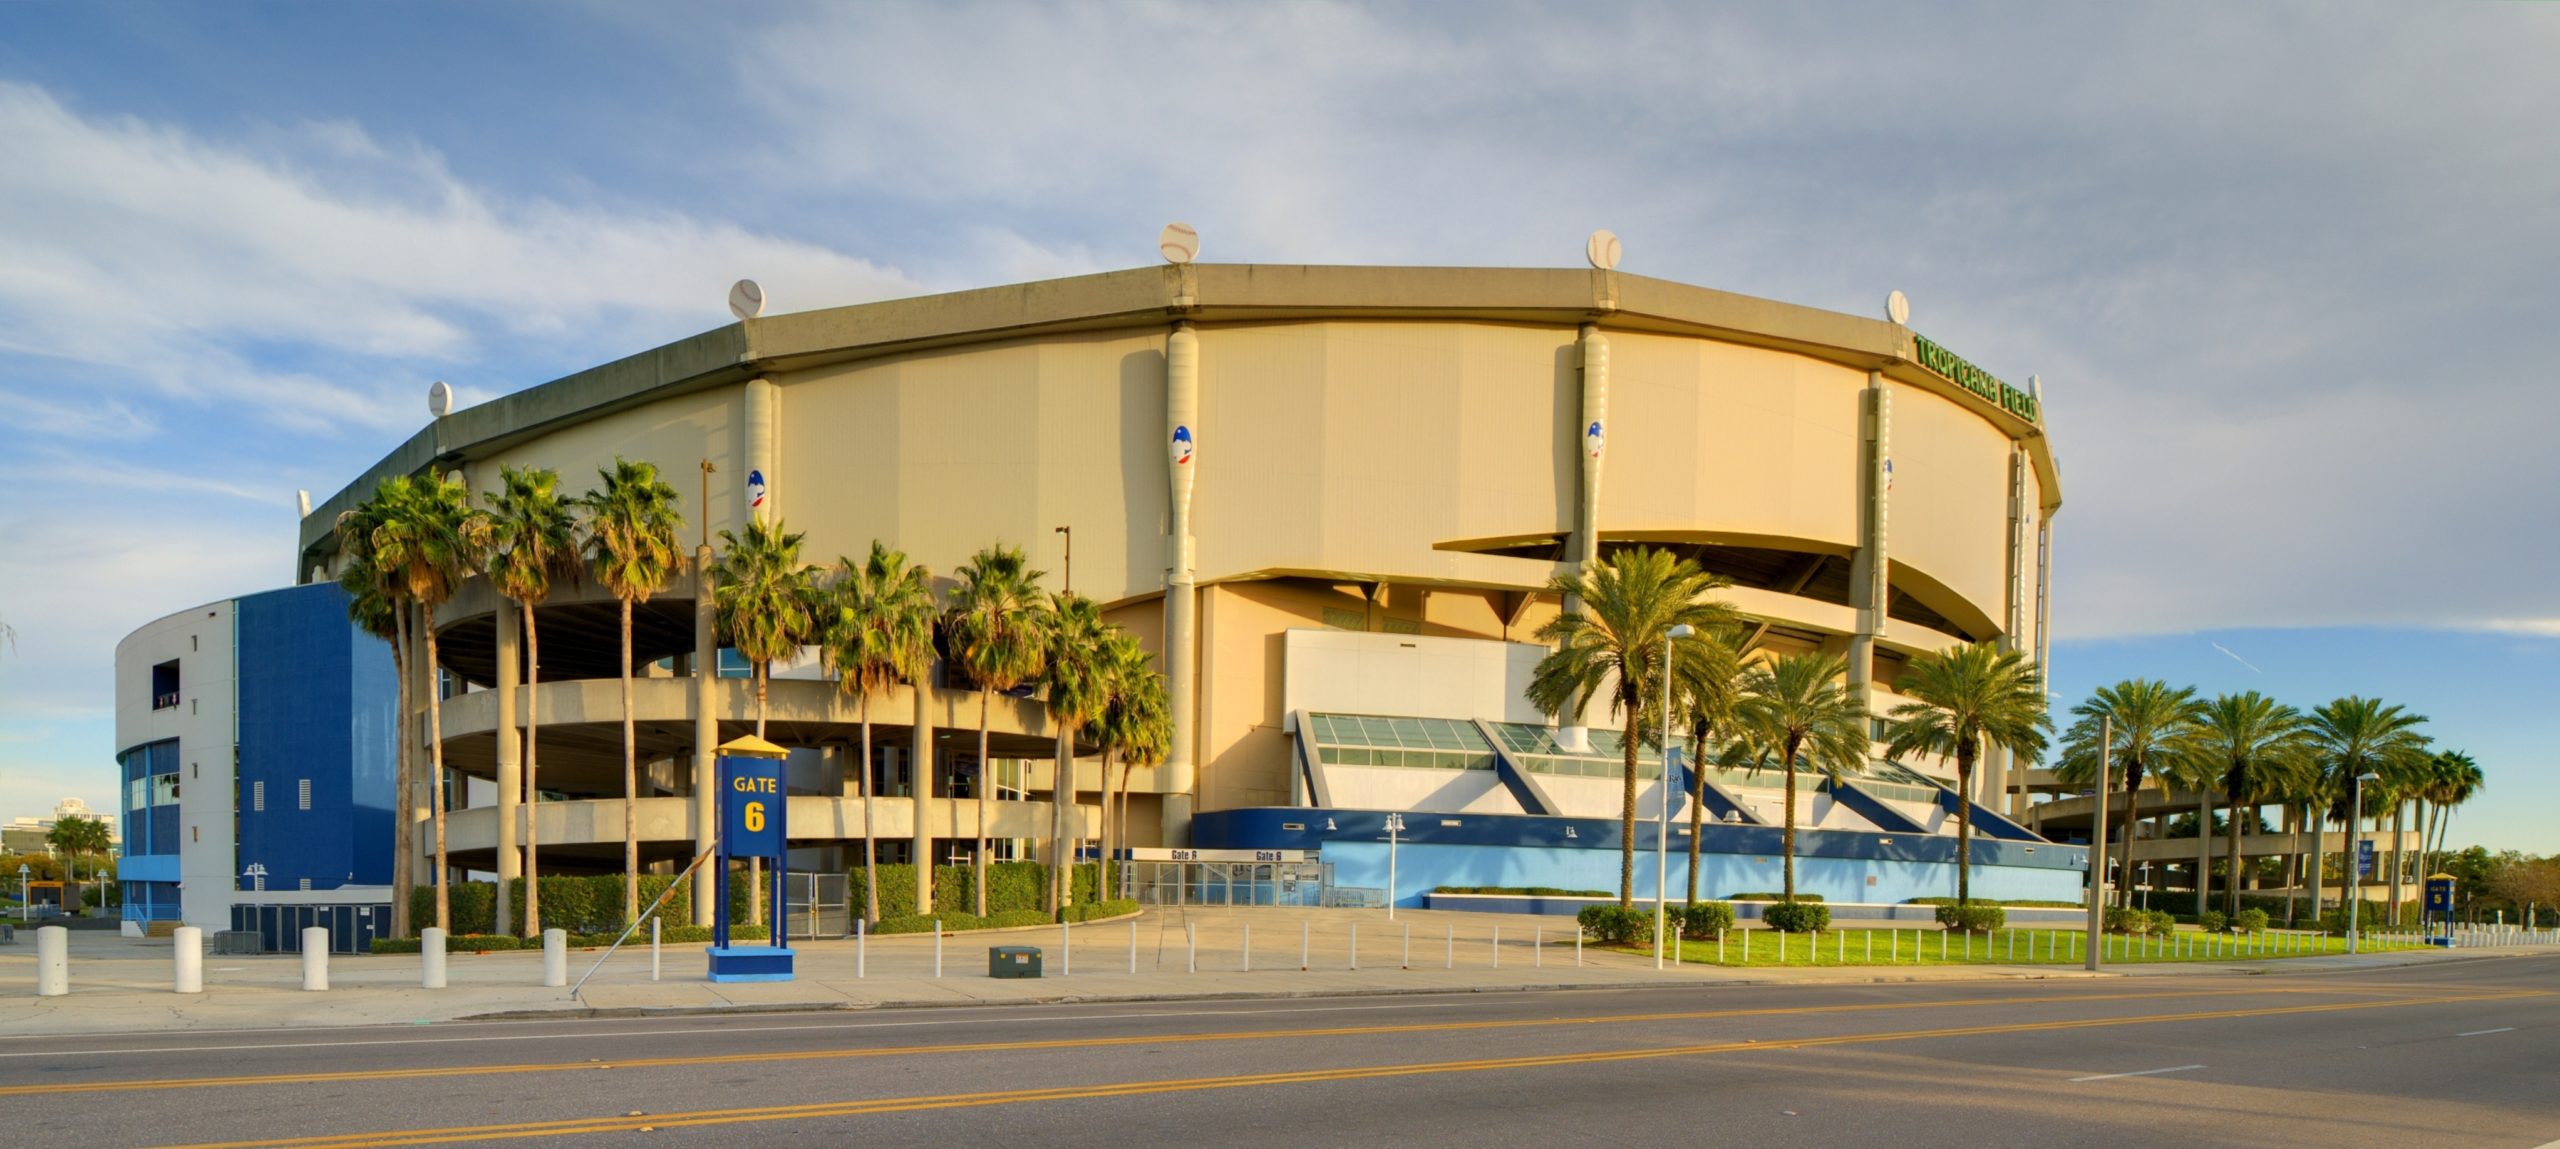 DeSantis vetoes 35 million for Tampa Bay Rays training facility